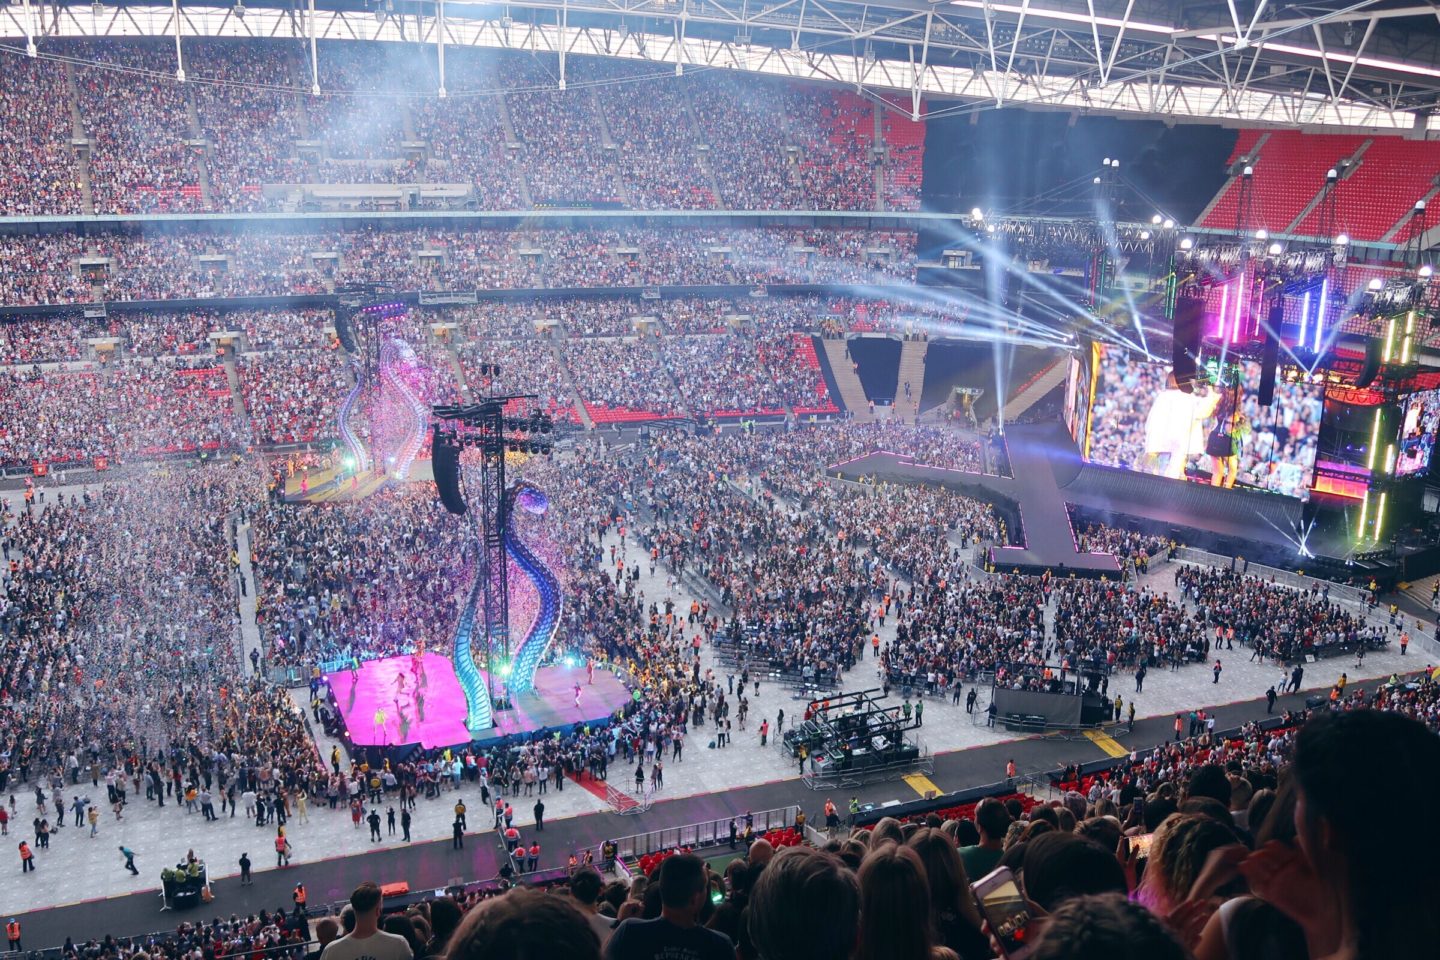 Taylor Swift | Reputation Stadium Tour | Wembley Stadium - Tea Time With Ciara1440 x 960